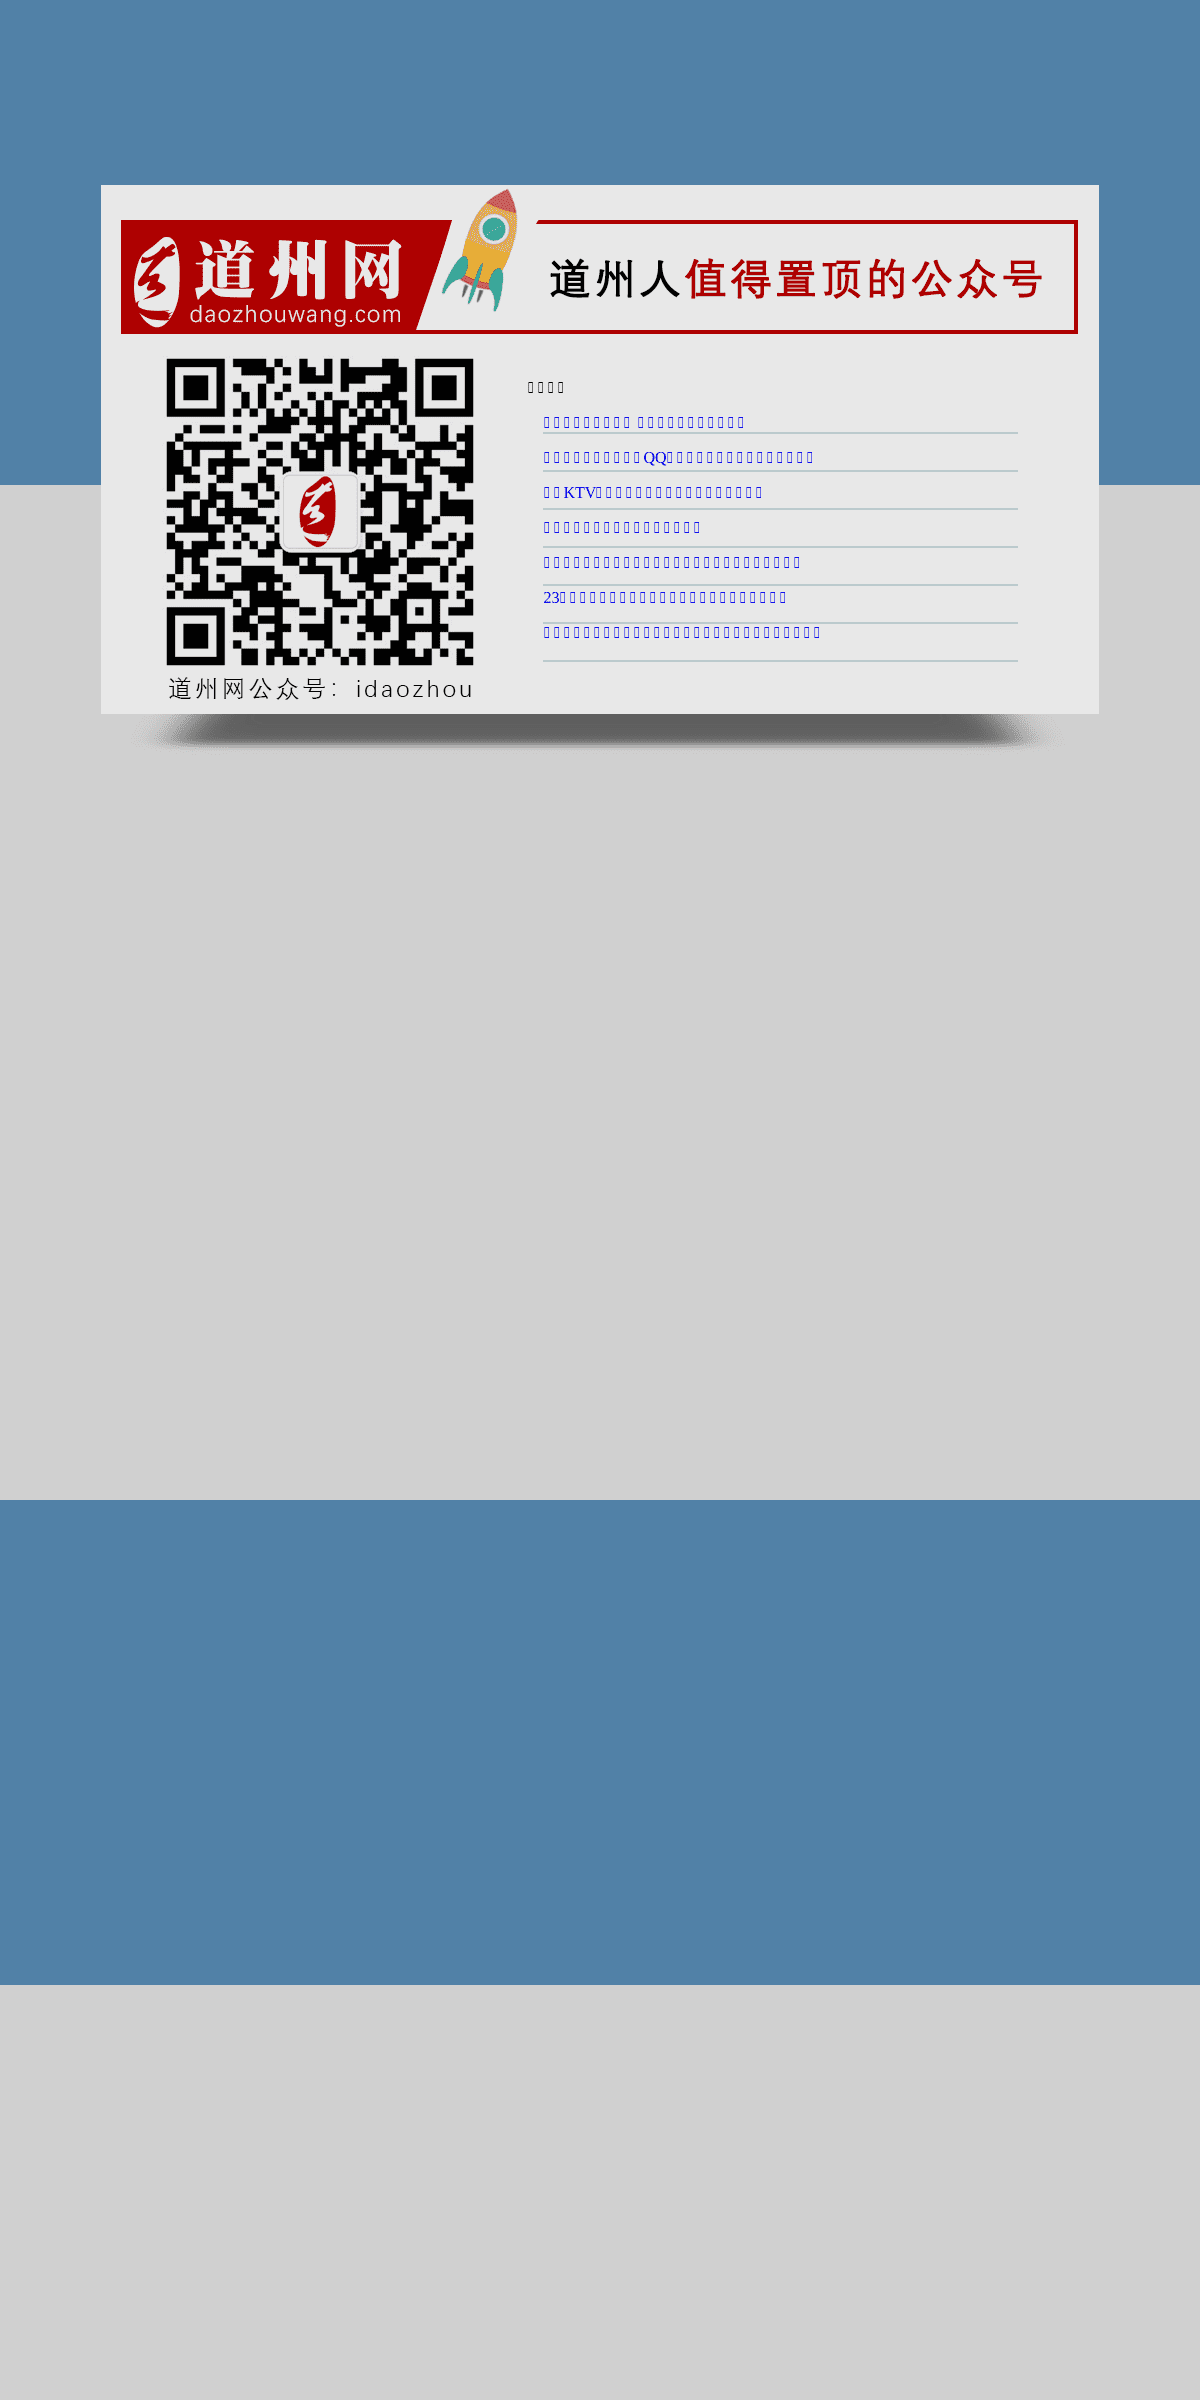 A complete backup of daozhouwang.com